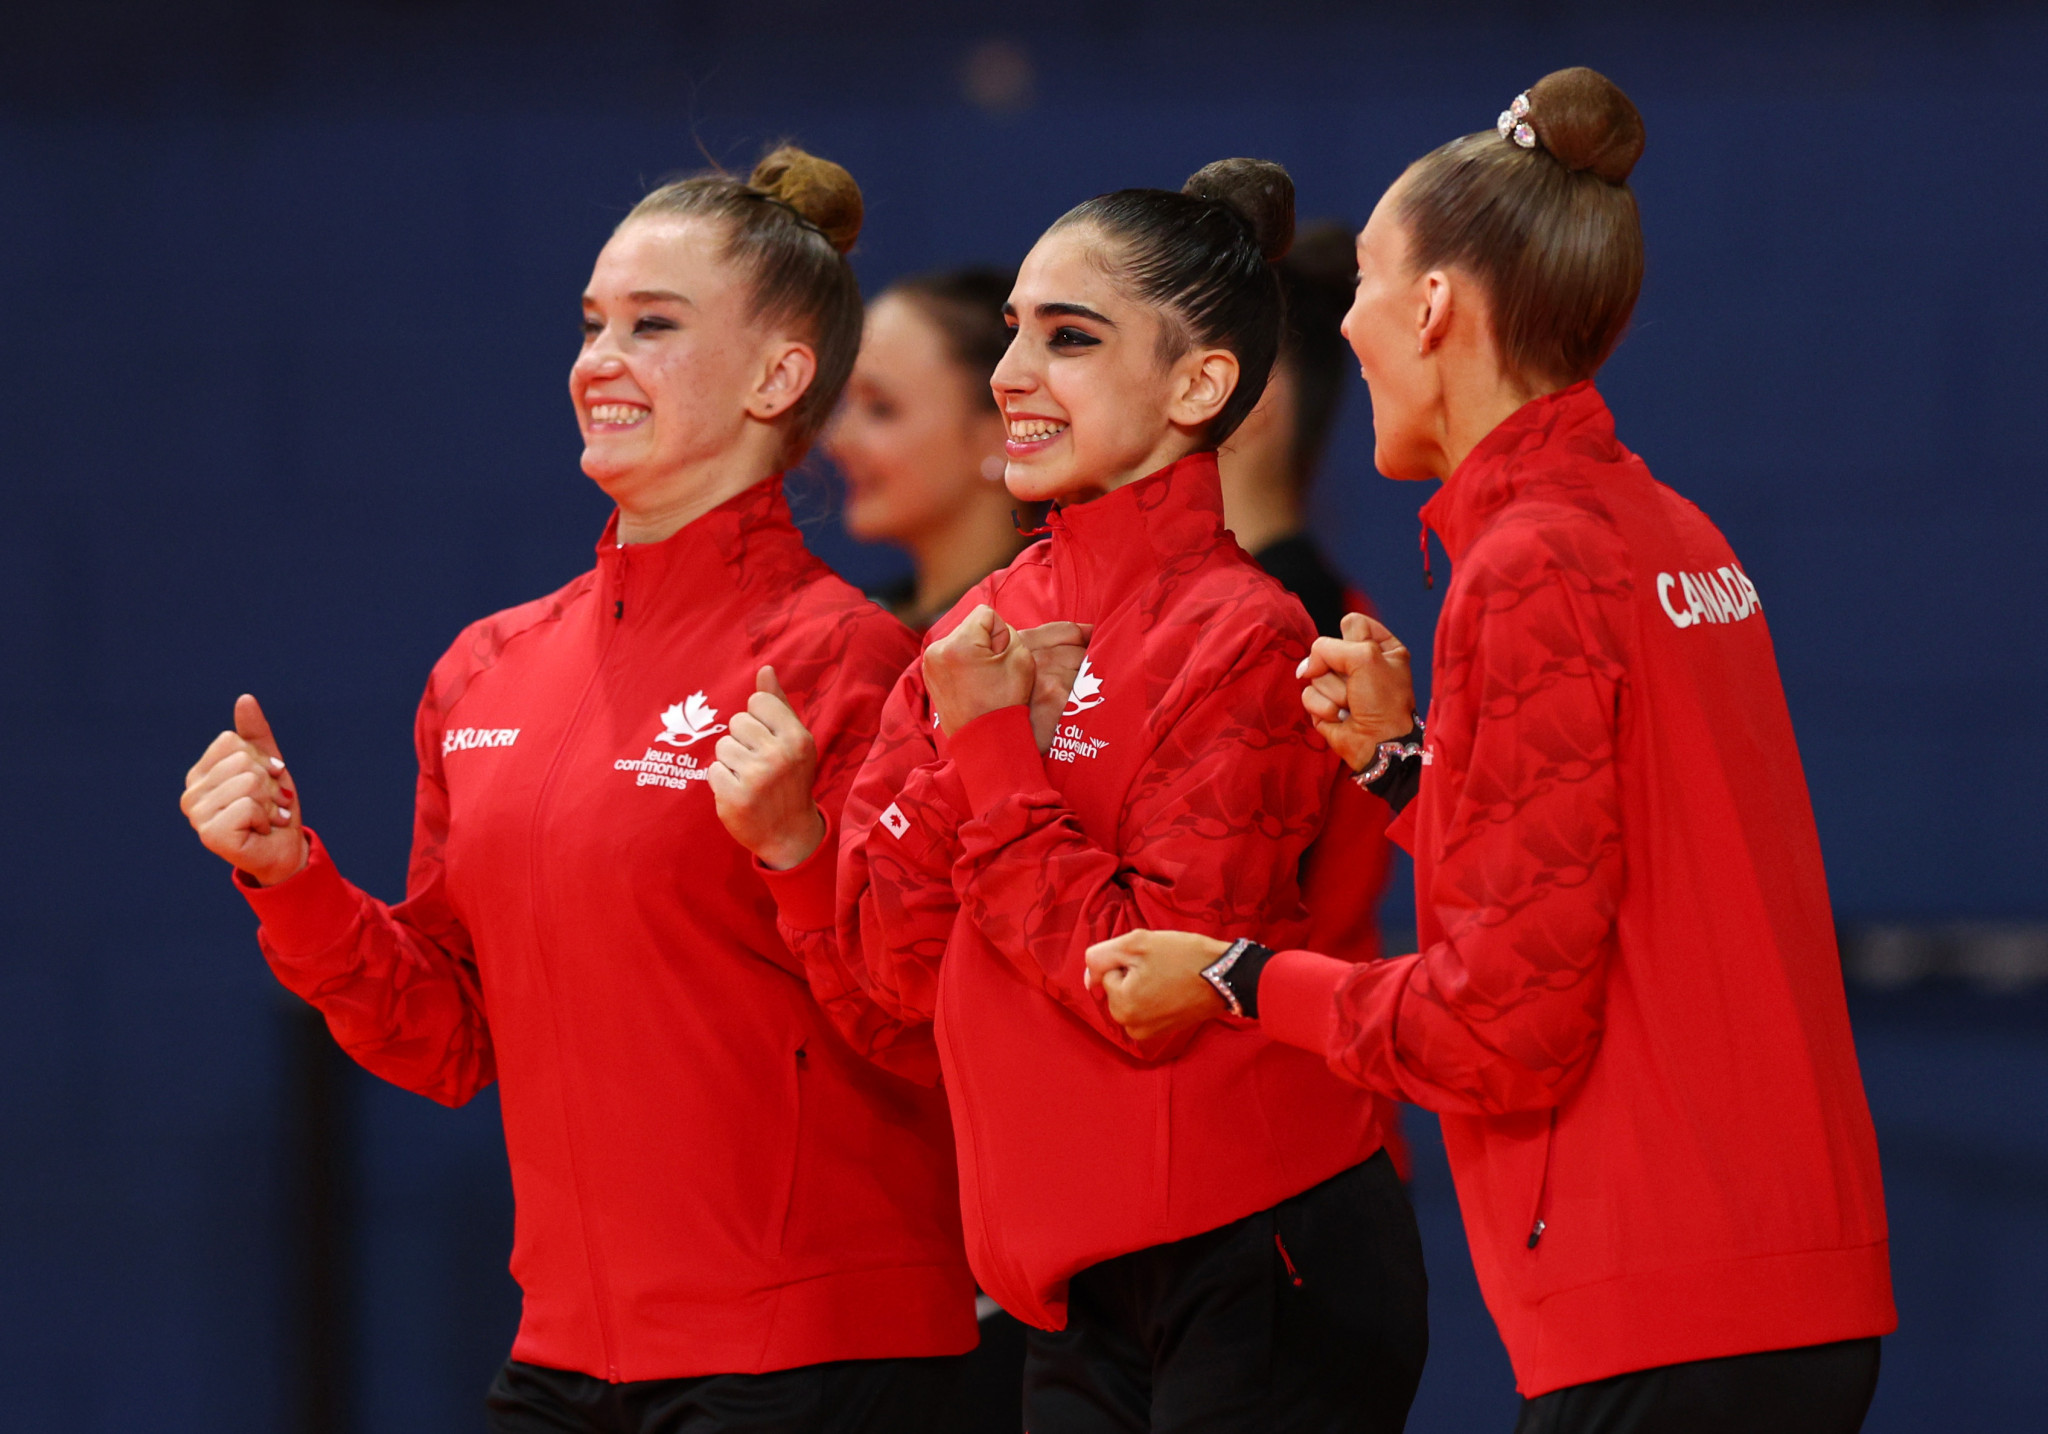 Canada victorious in rhythmic gymnastics team event at Birmingham 2022 as individual qualifiers set